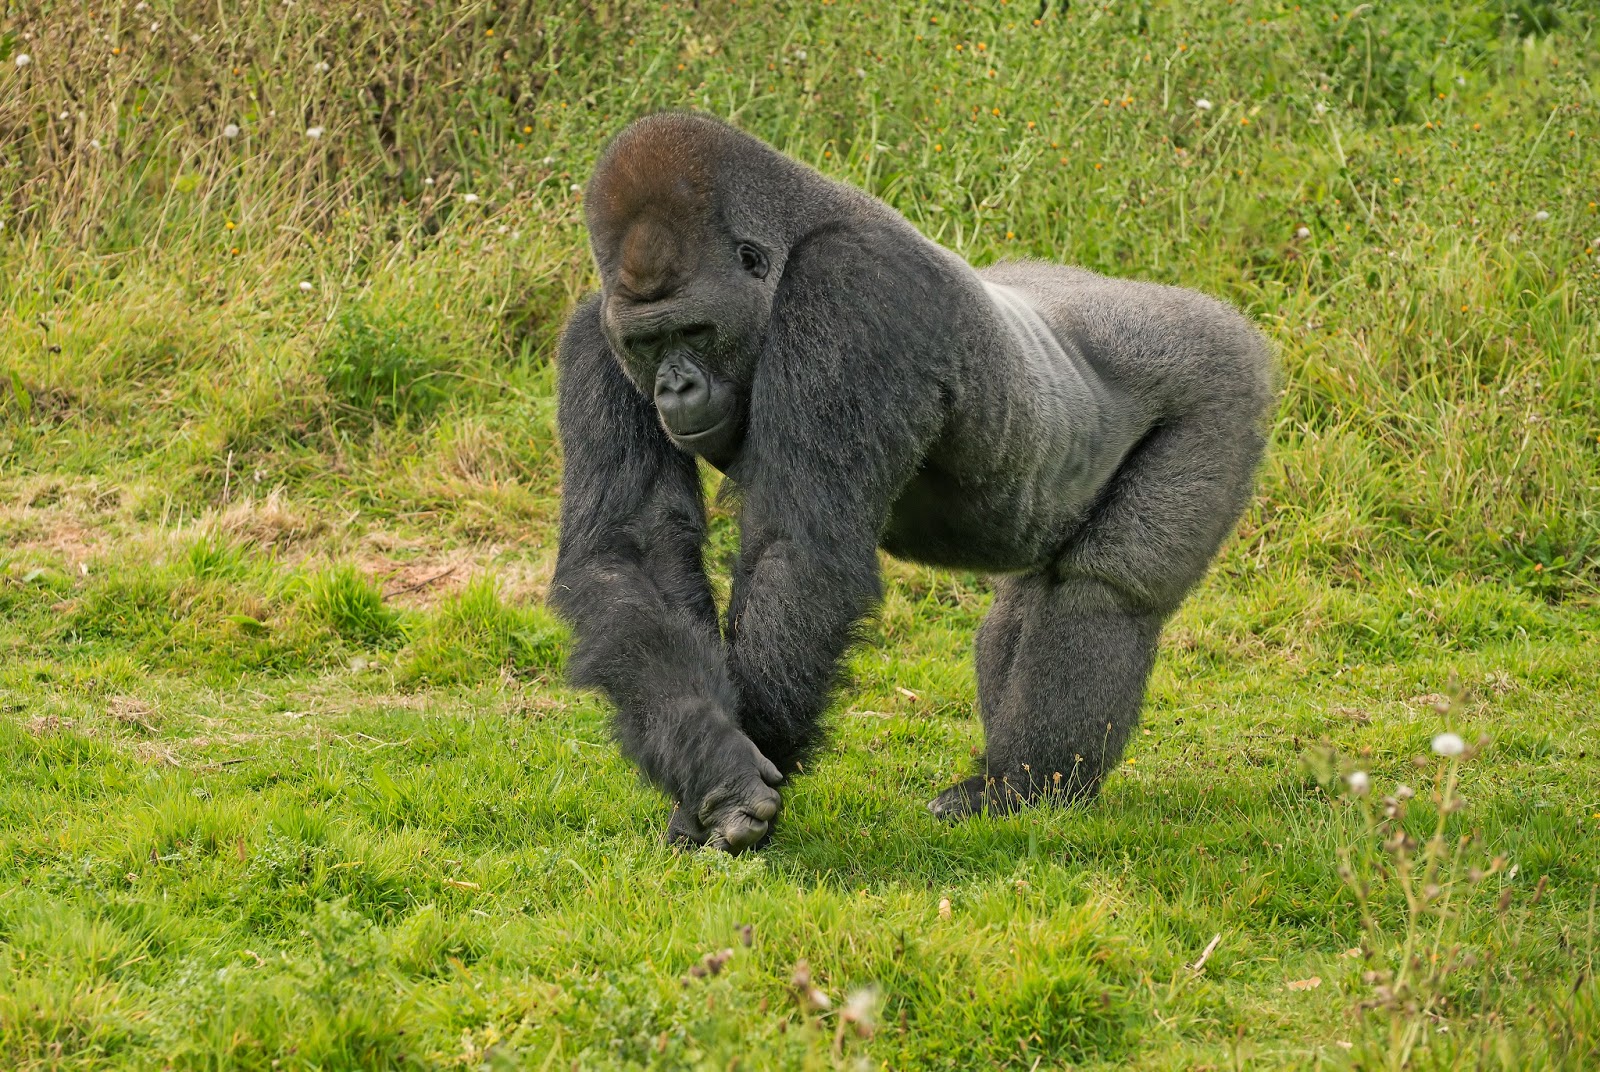 Anthony Miners Wildlife Photos: Silverback Gorillas